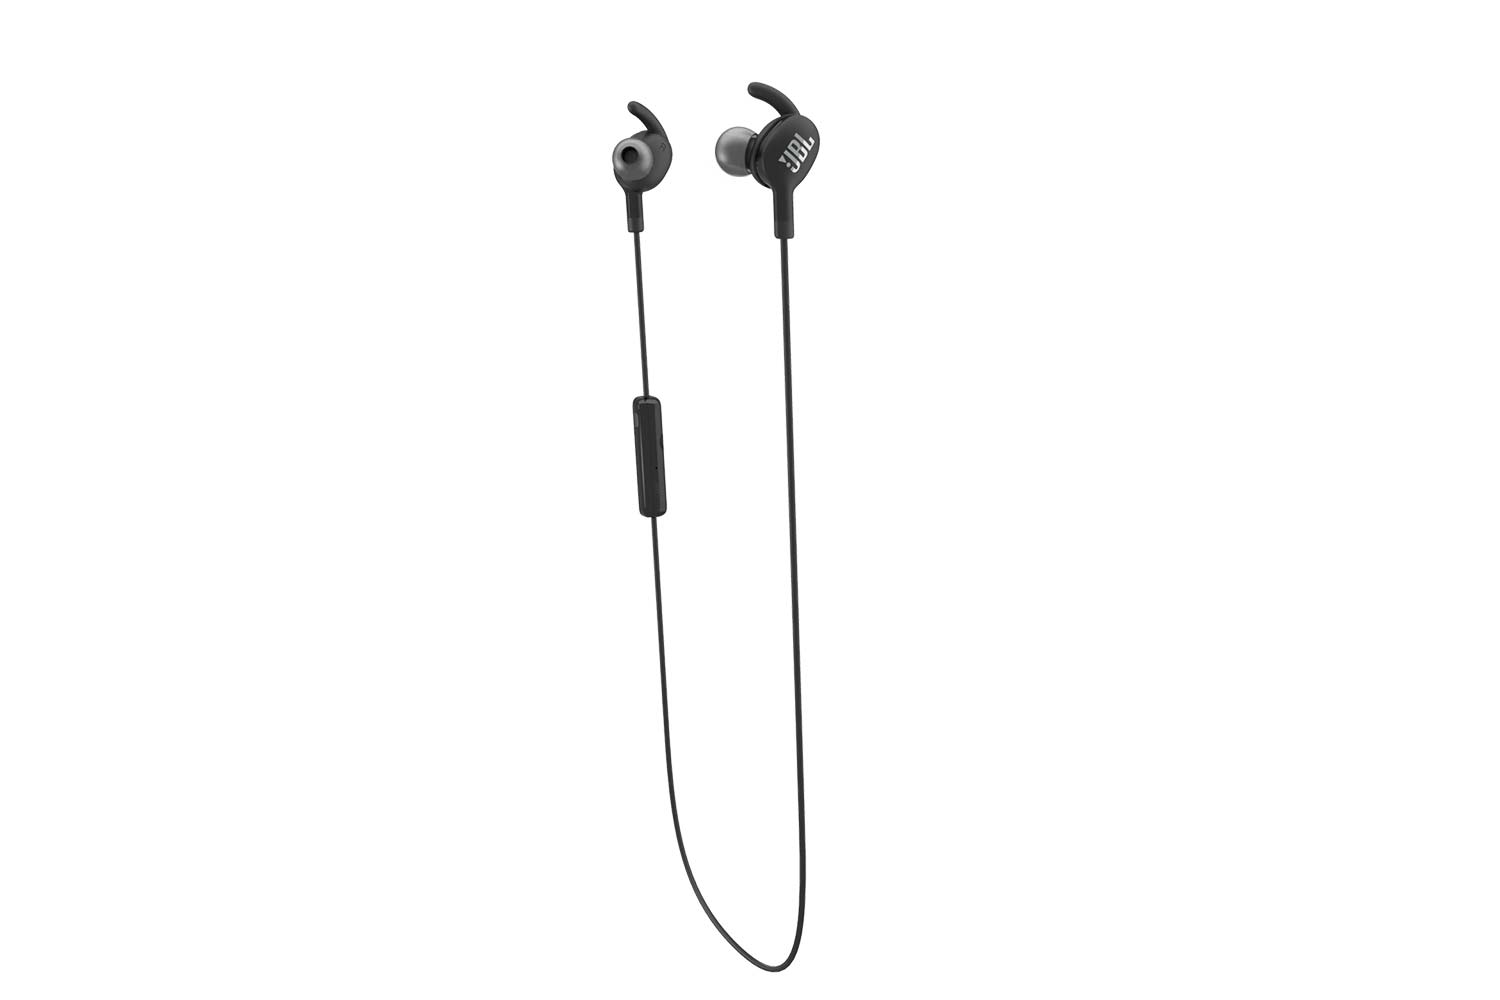 jbl new headphones ifa everest reflect grip noise cancelling bluetooth large 100  ie bt black angledleft